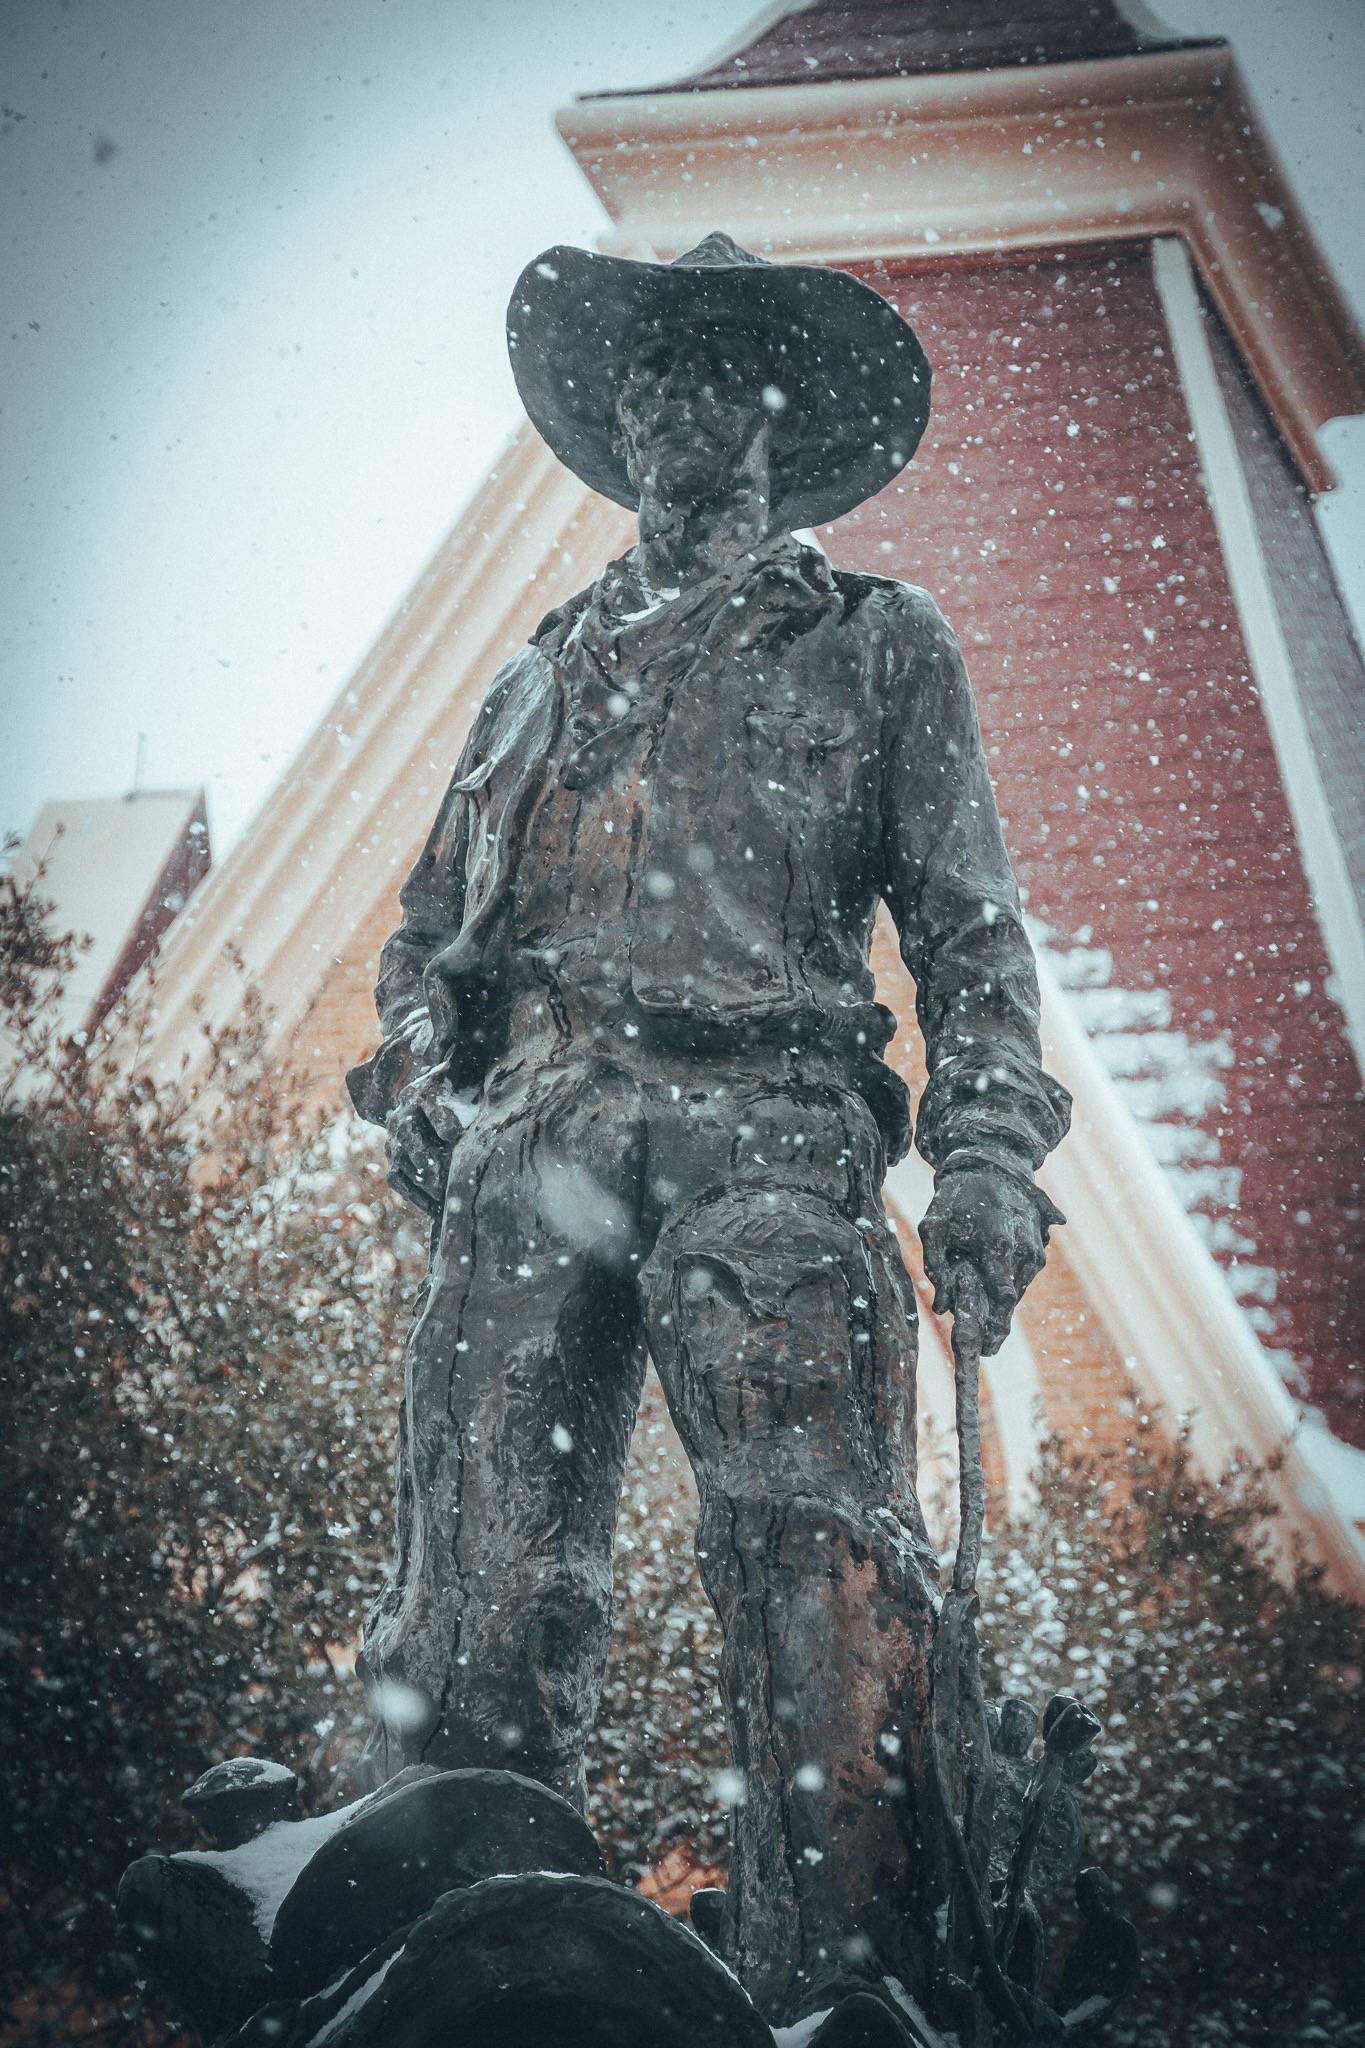 Snow falling on statue